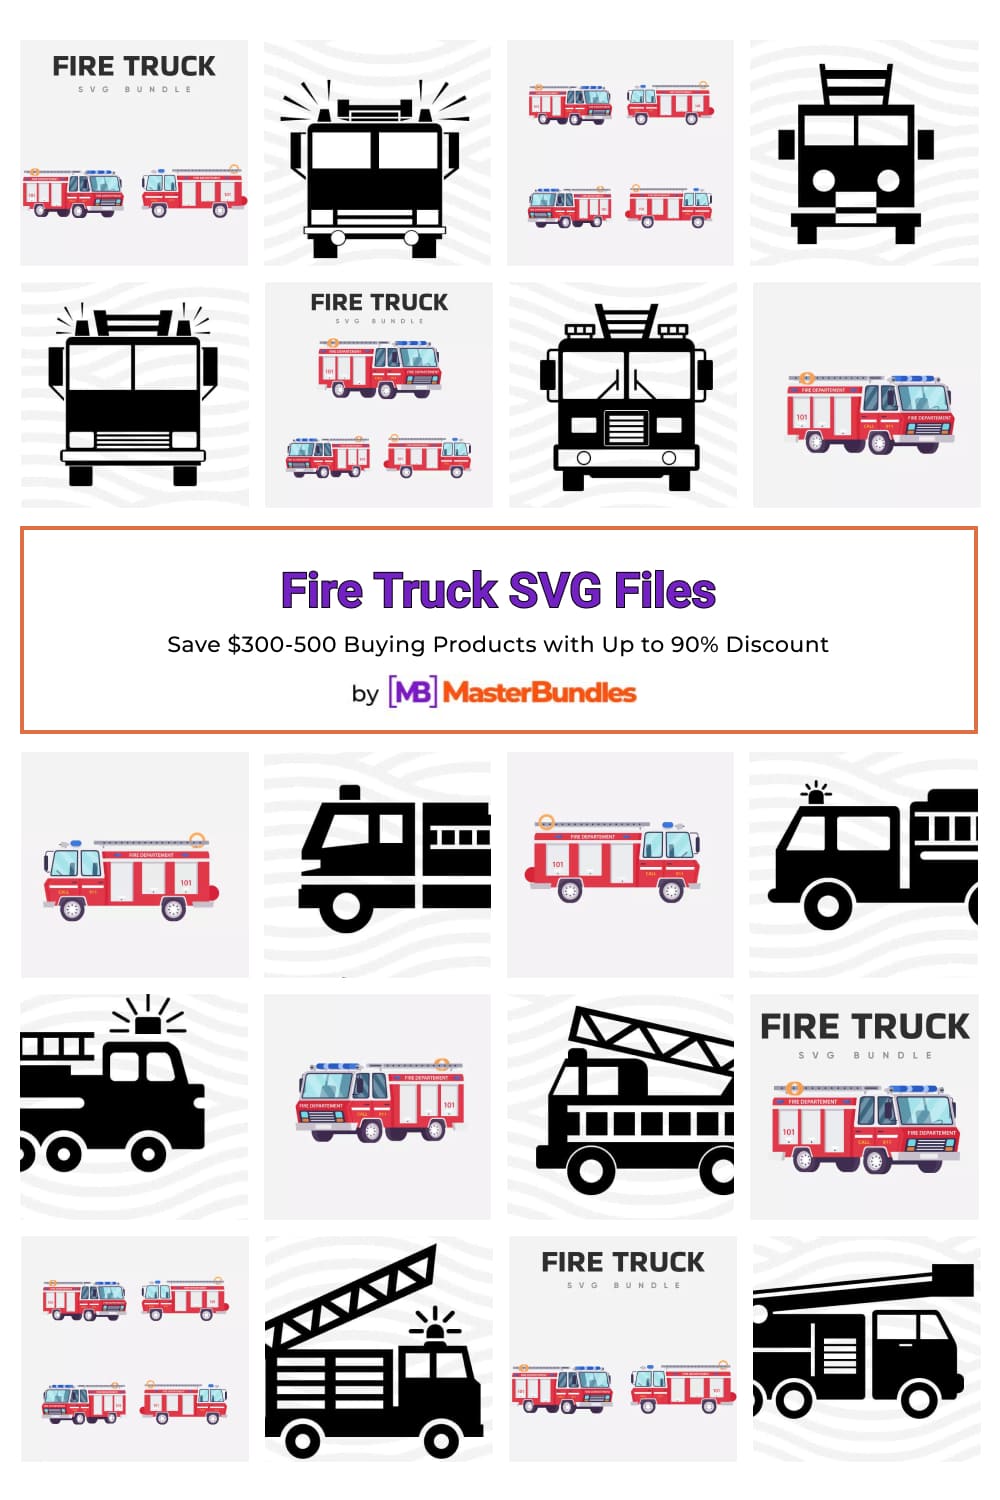 Fire Truck SVG Files Pinterest image.